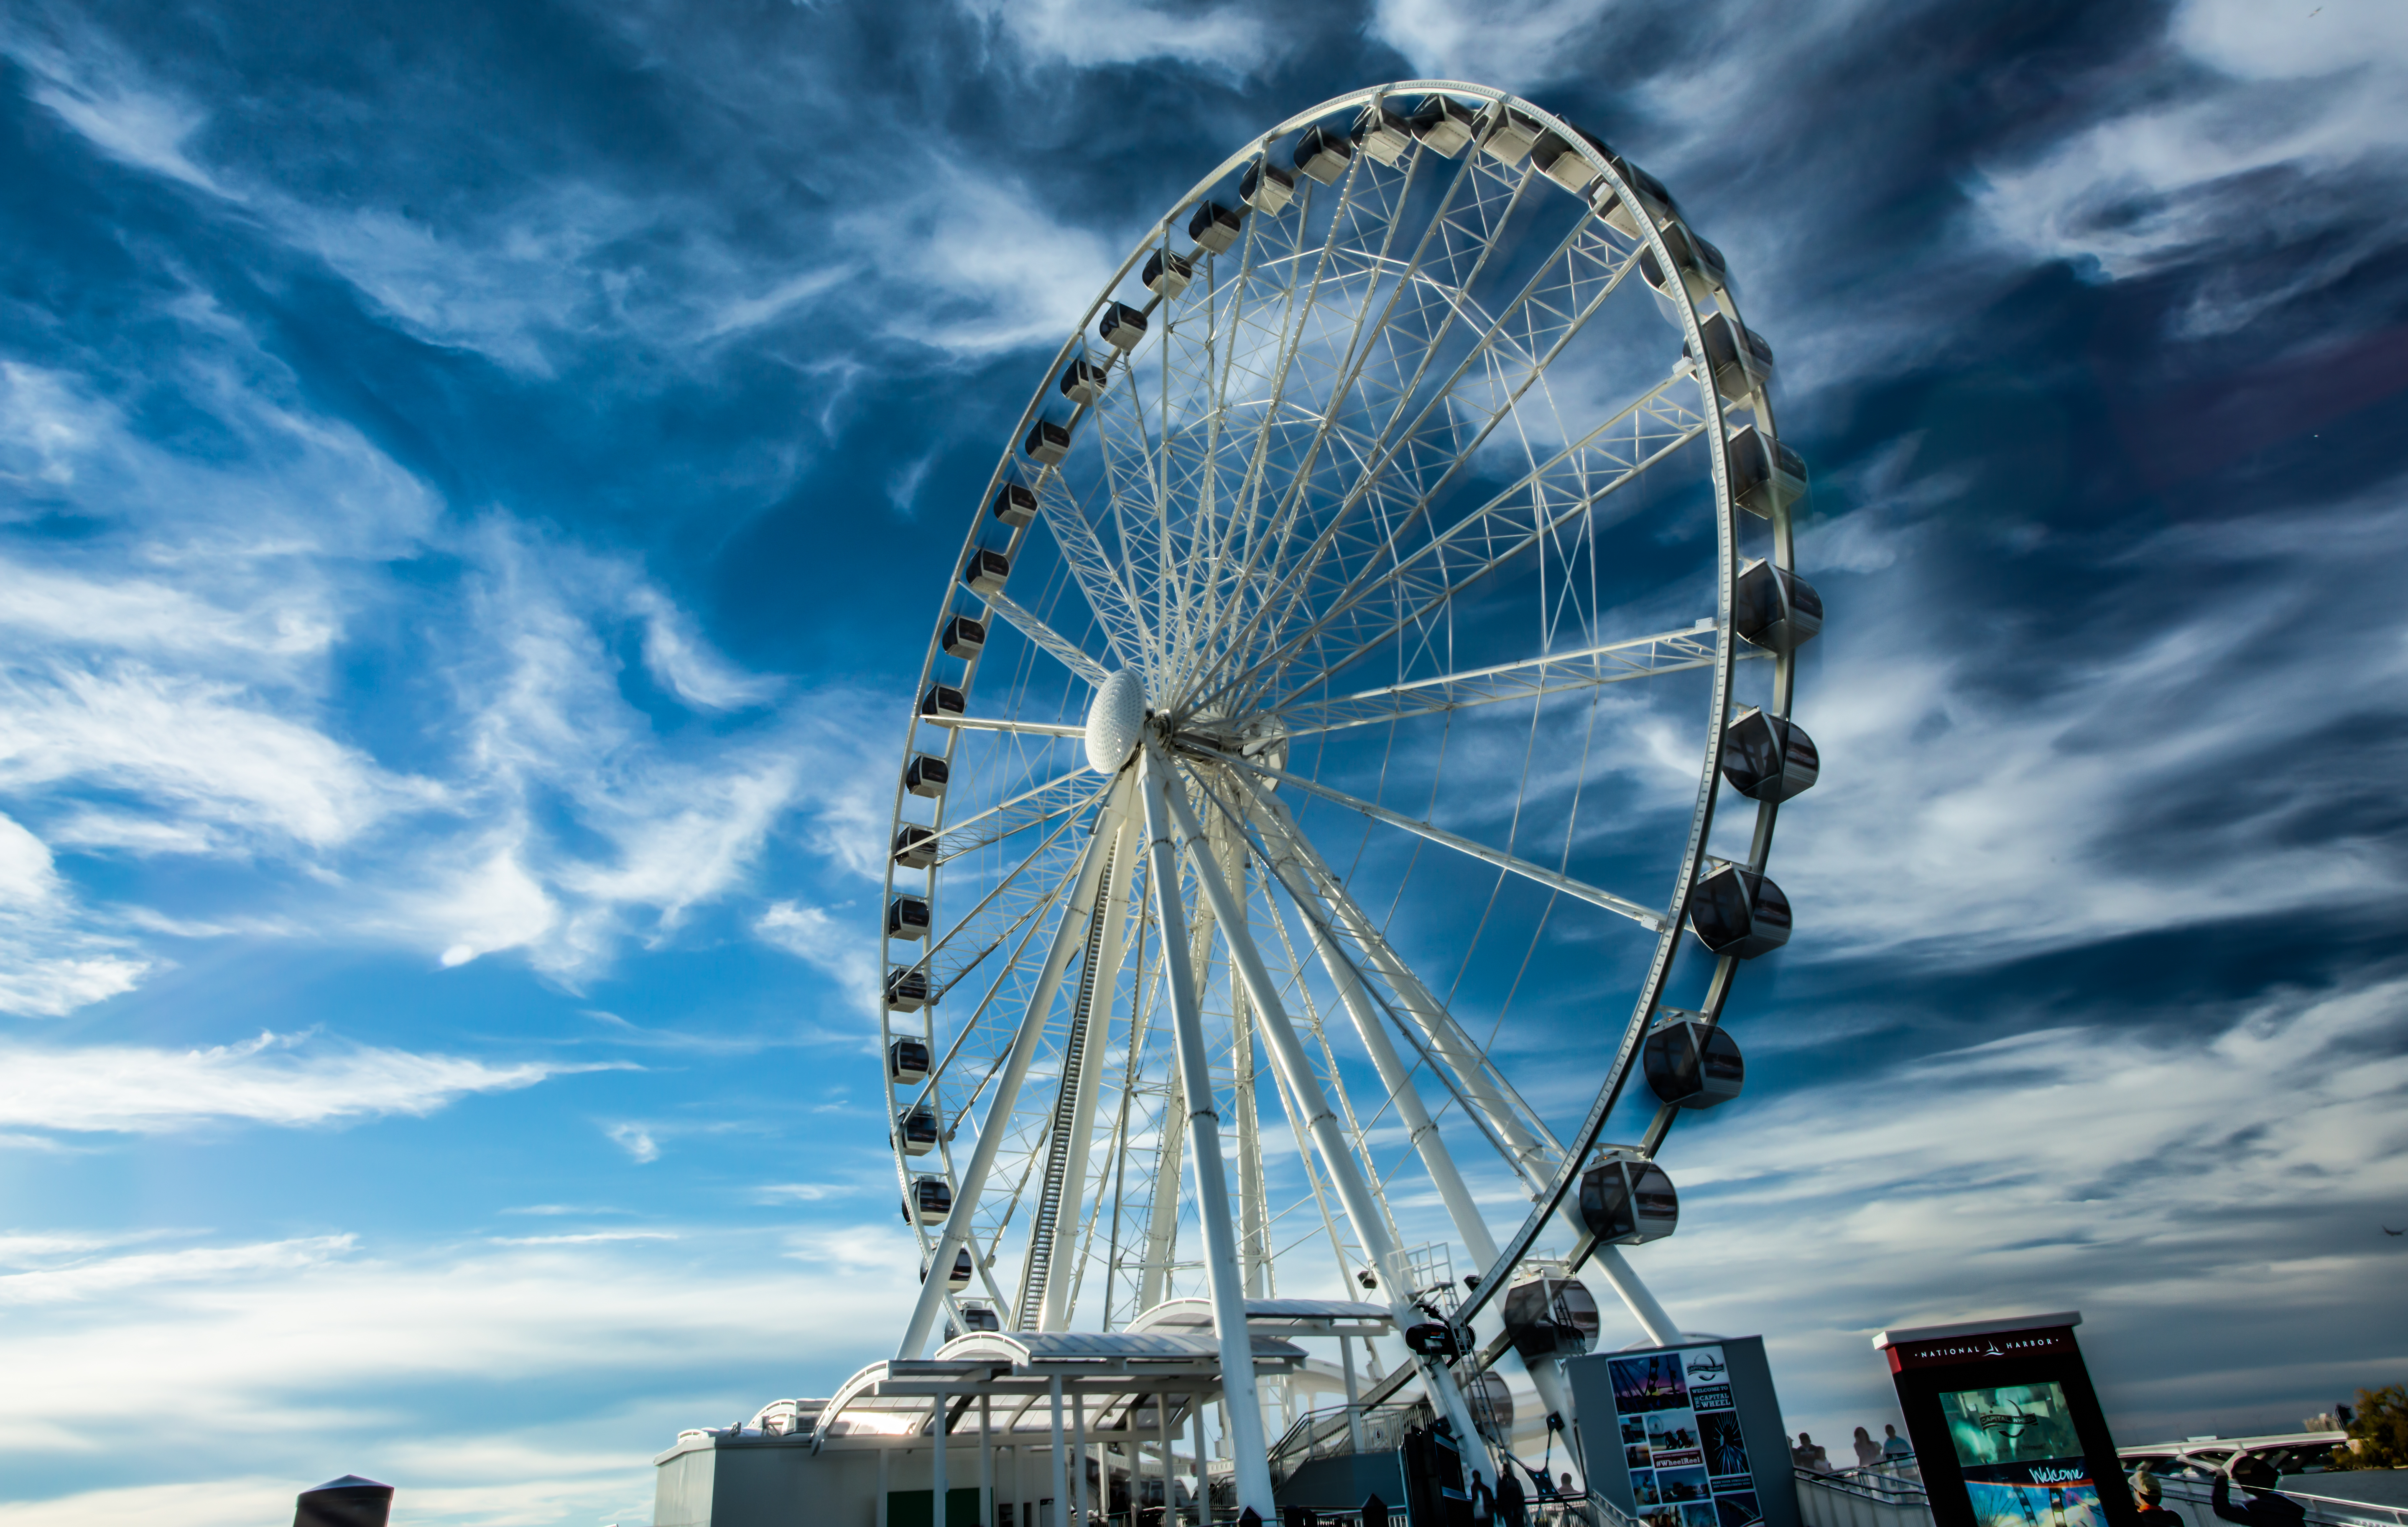 The Capital Wheel, National Harbor Ferris Wheel